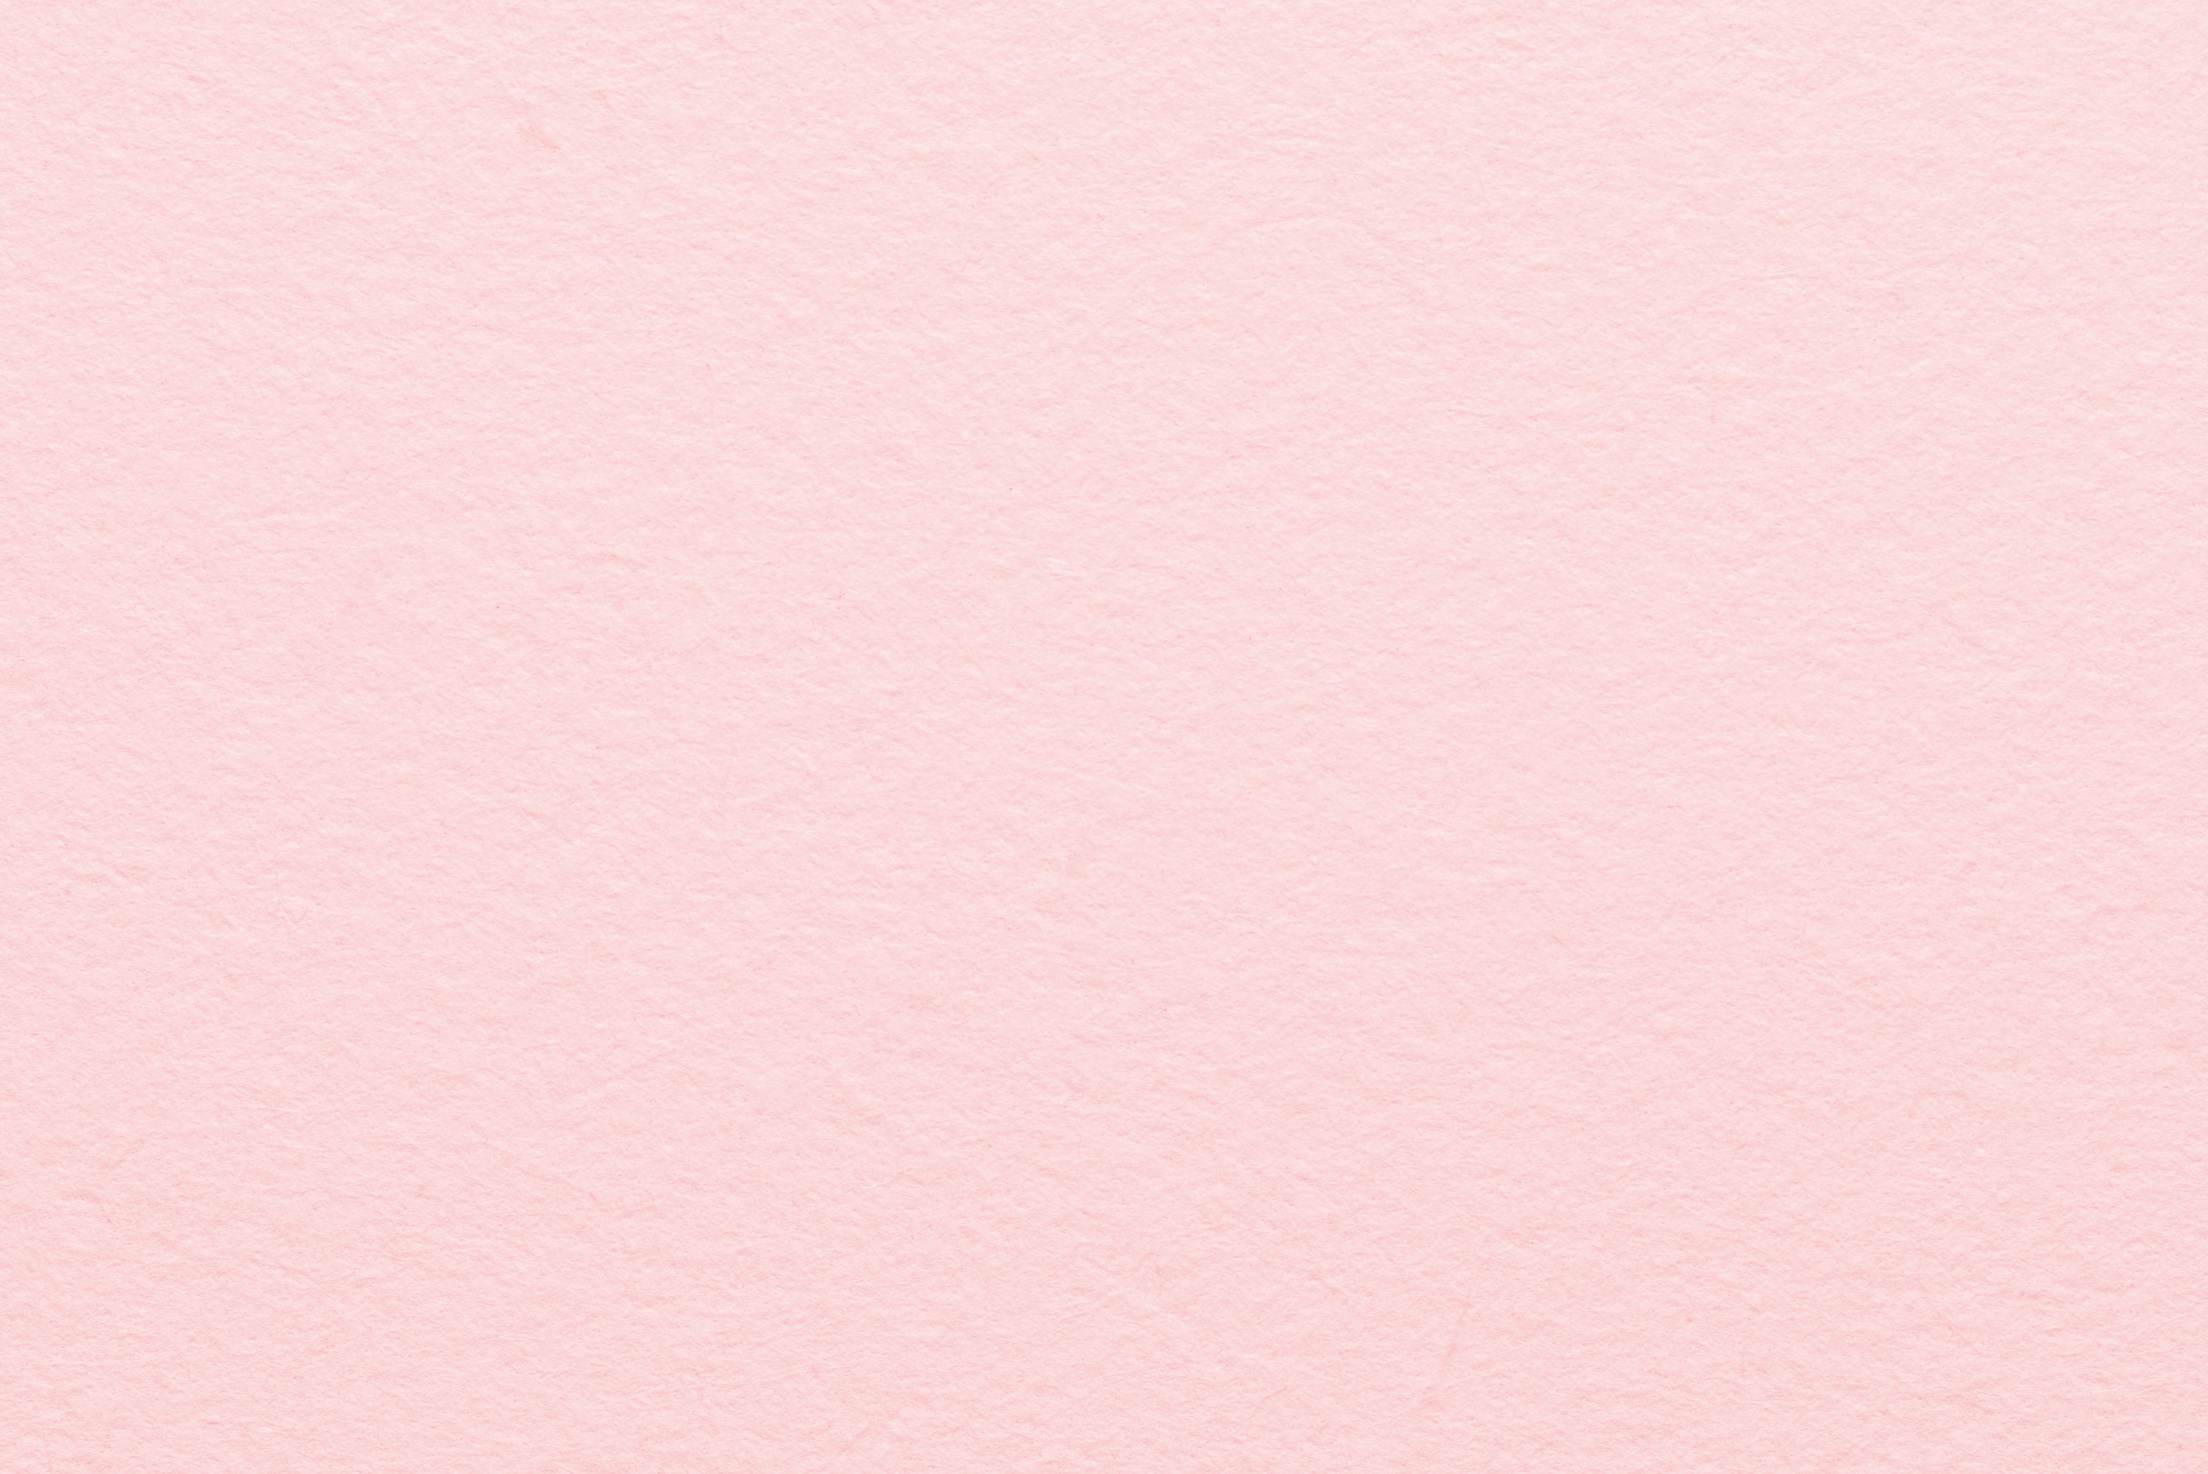 Pink paper texture